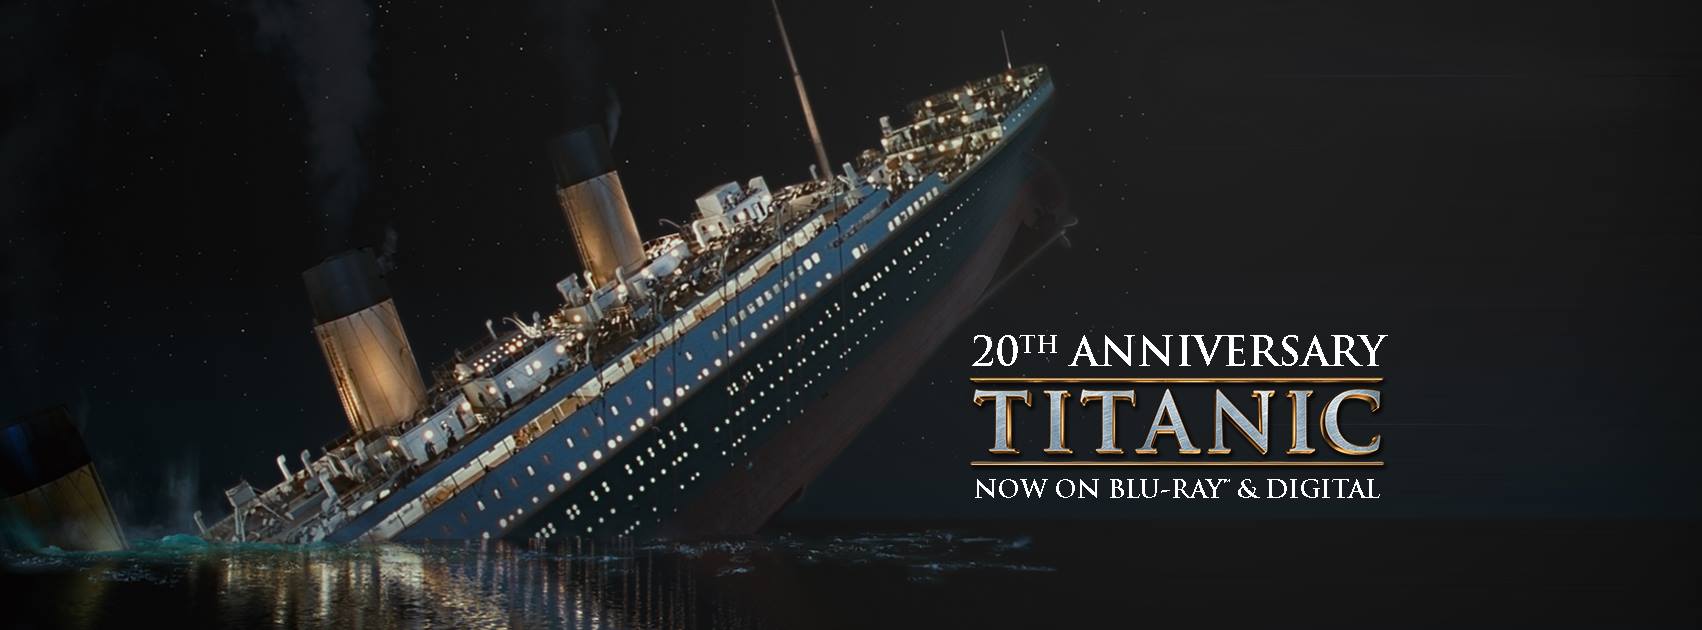 Титаник 2017